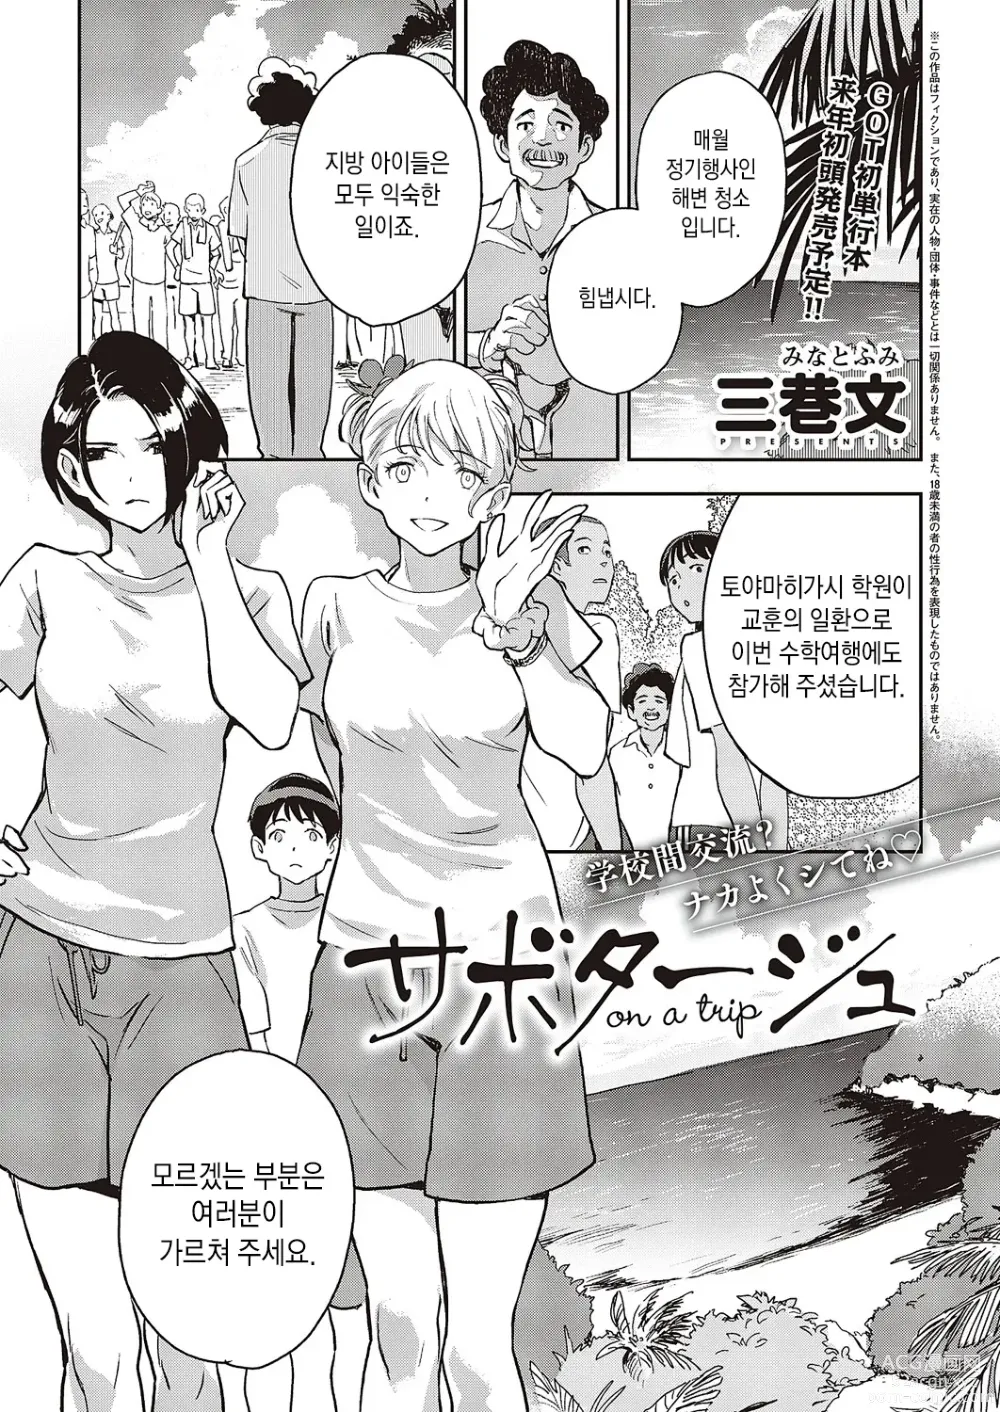 Page 1 of manga 사보타주